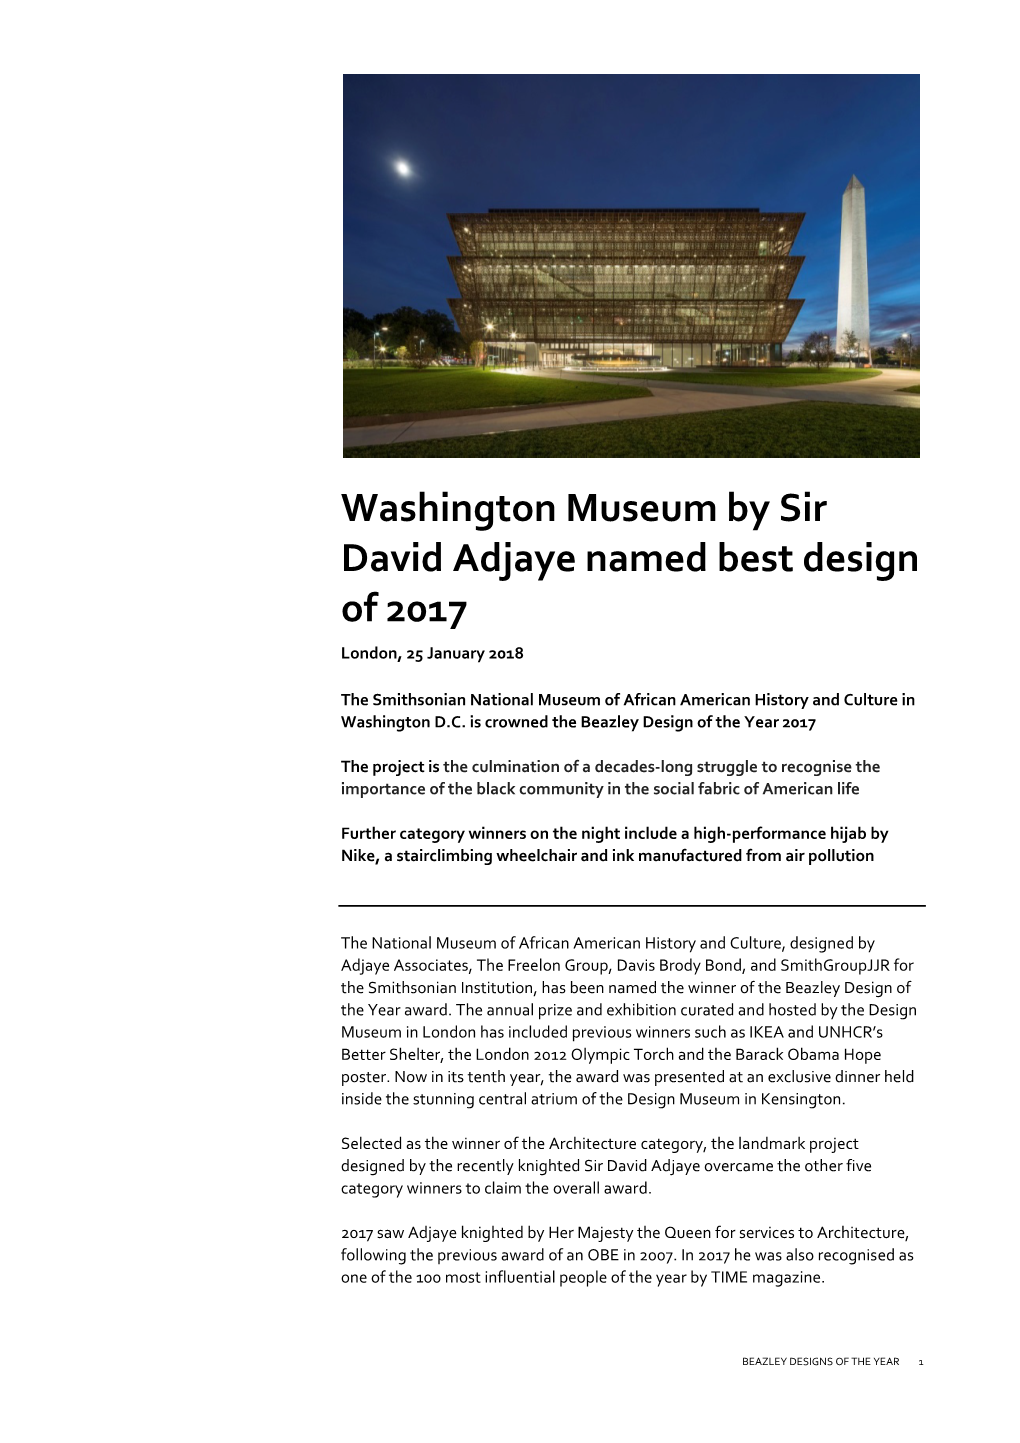 Washington Museum by Sir David Adjaye Named Best Design of 2017 London, 25 January 2018